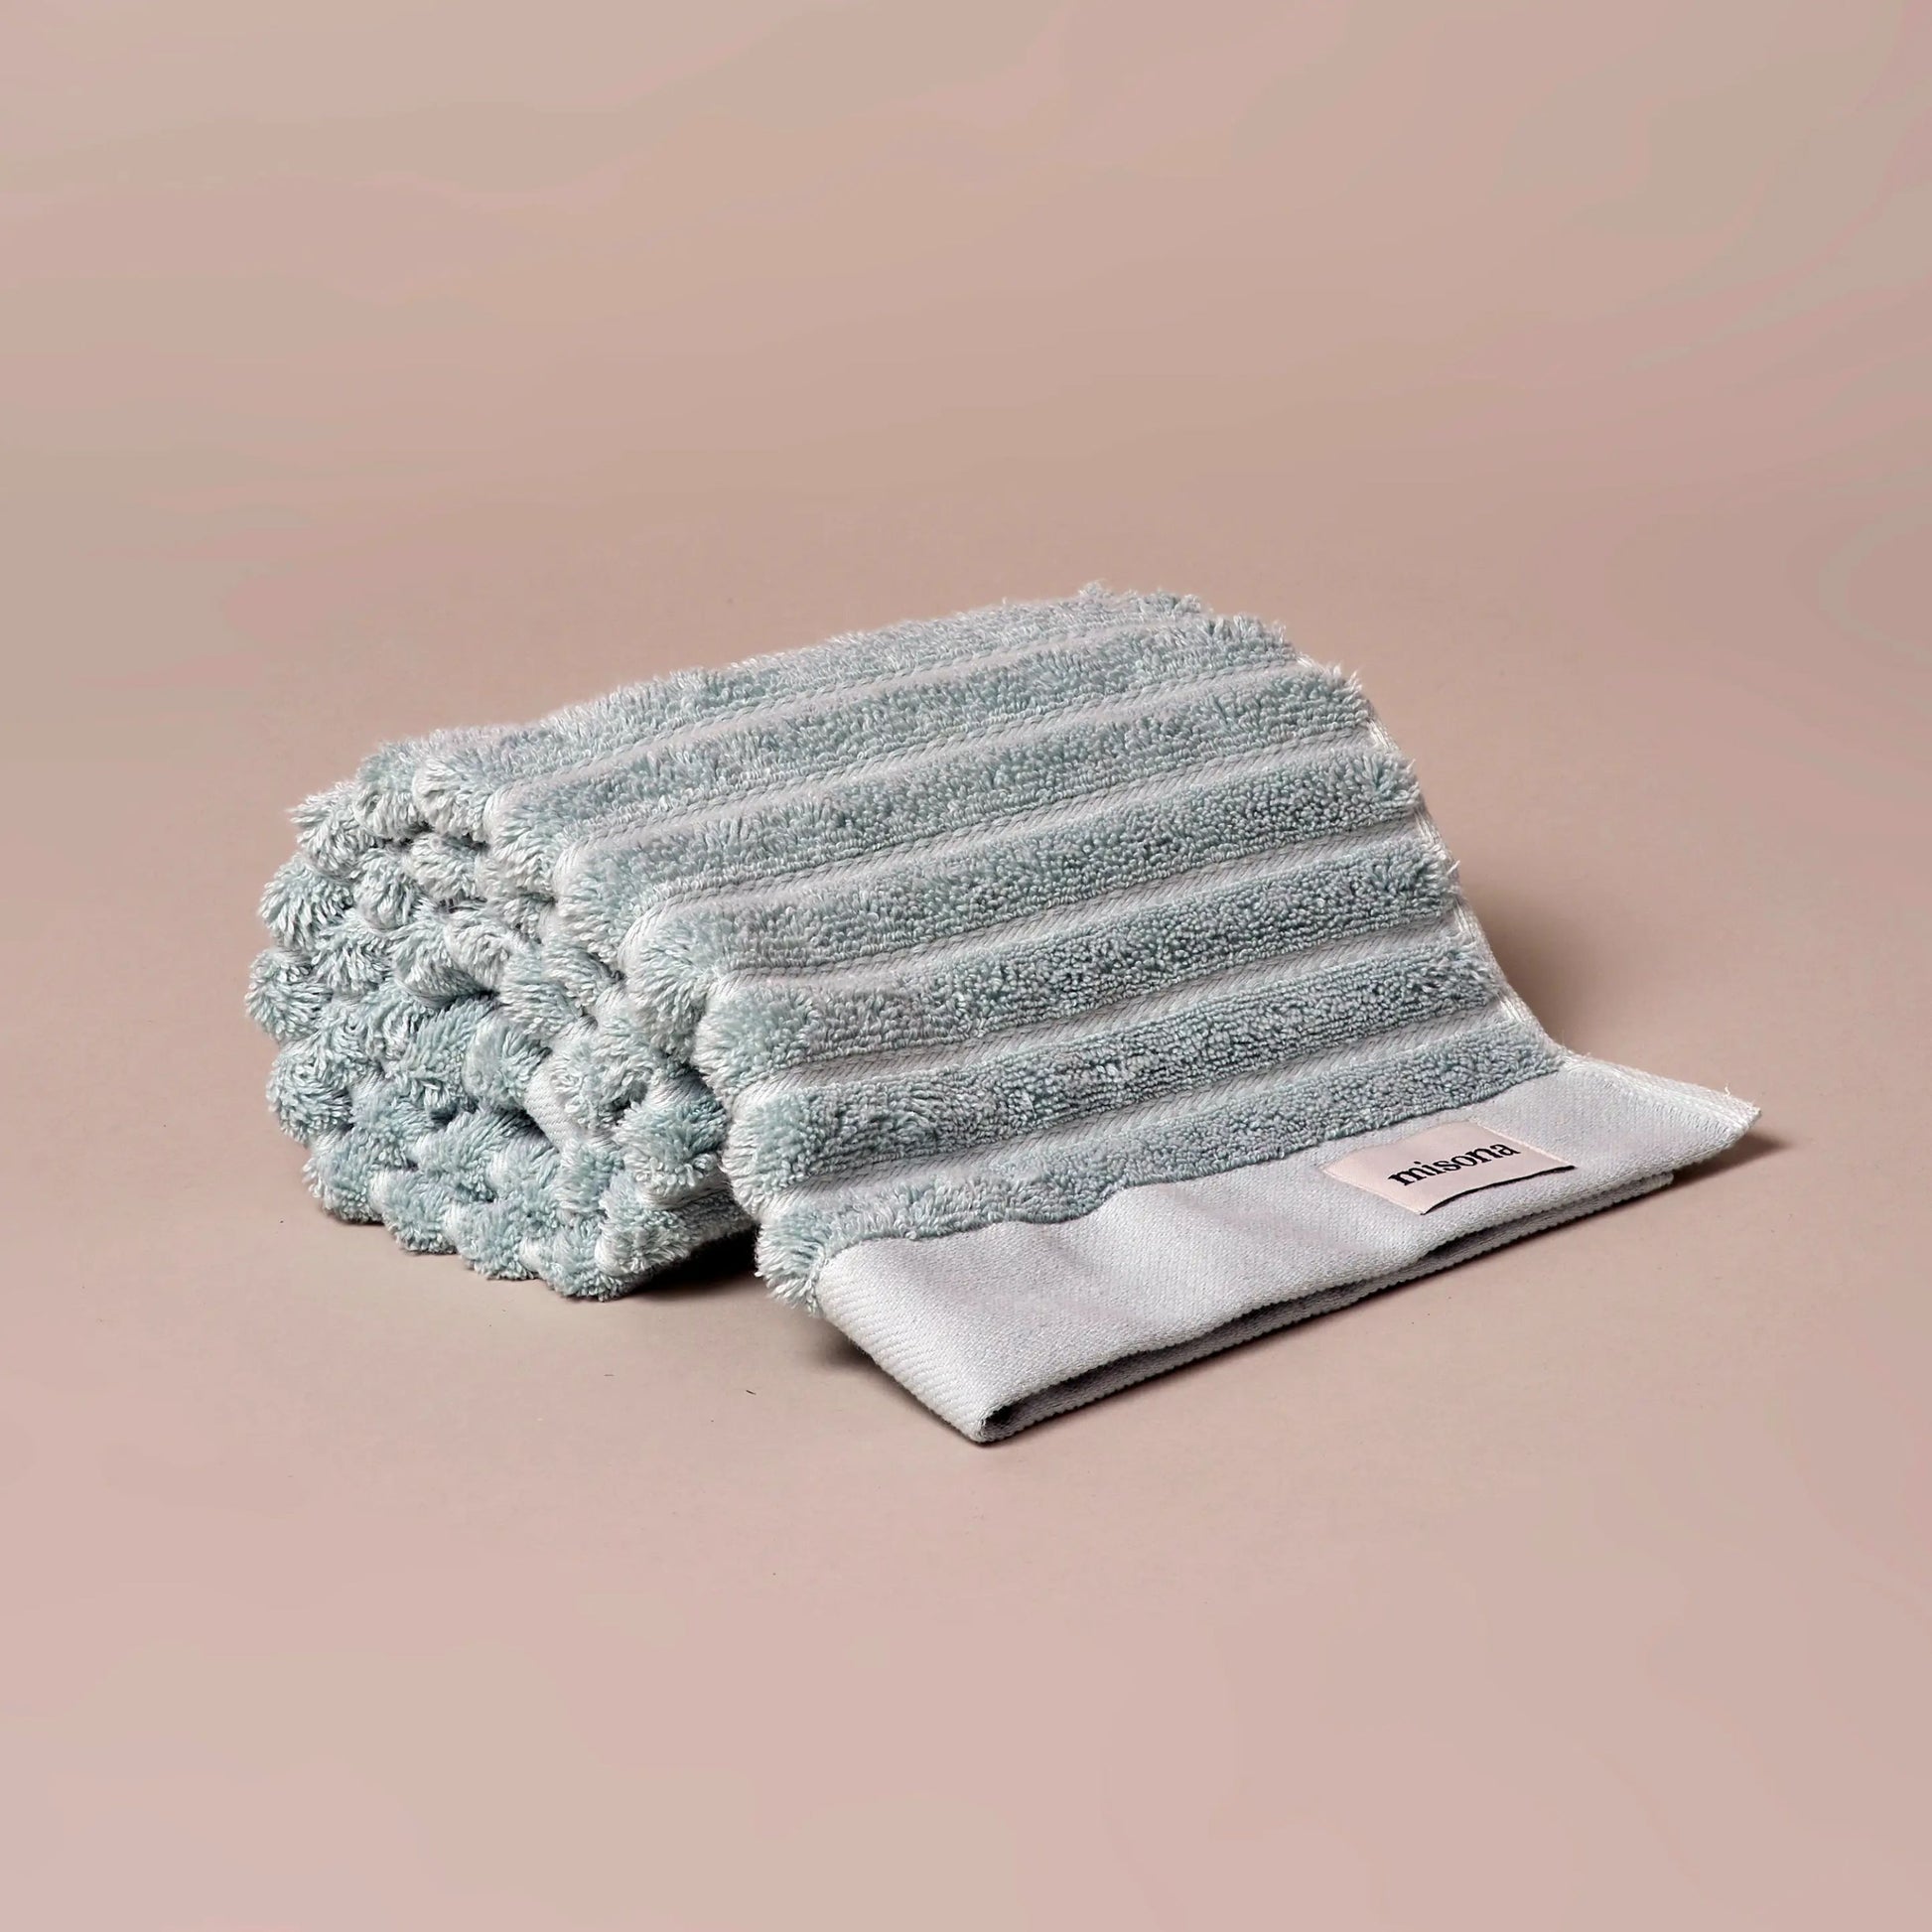 Misona Ribbed Organic Cotton Hand Towel - Duck Egg - Hand Towels - Misona - Bliss Bathroom Supplies -